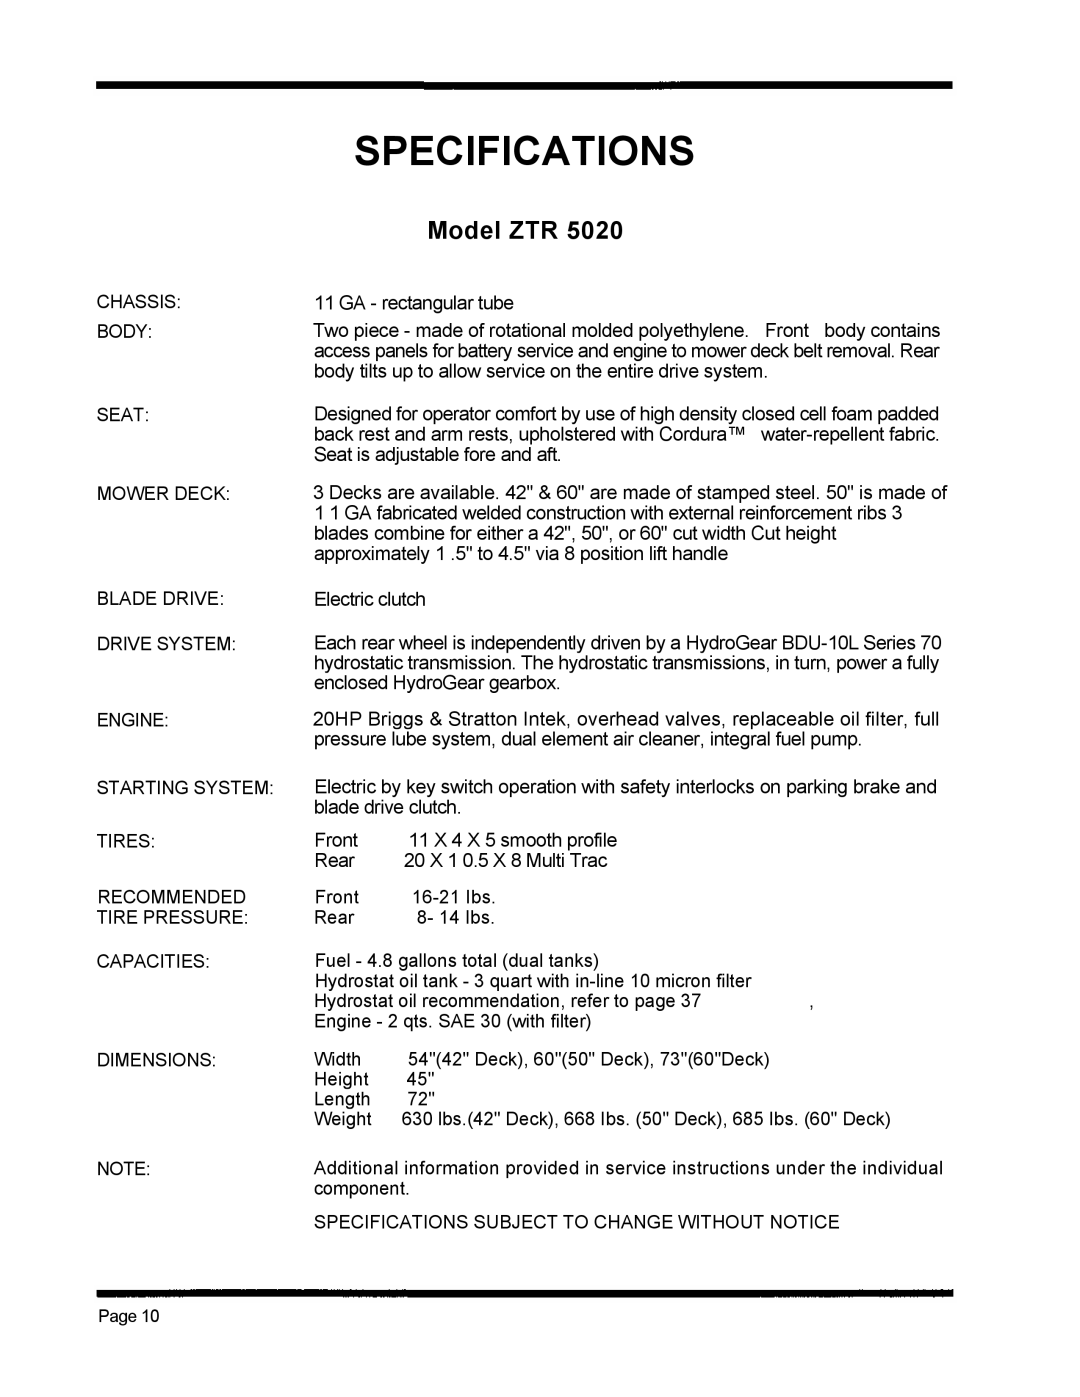 Dixon ZTR 5020, ZTR 5424 manual Specifications, Model ZTR 